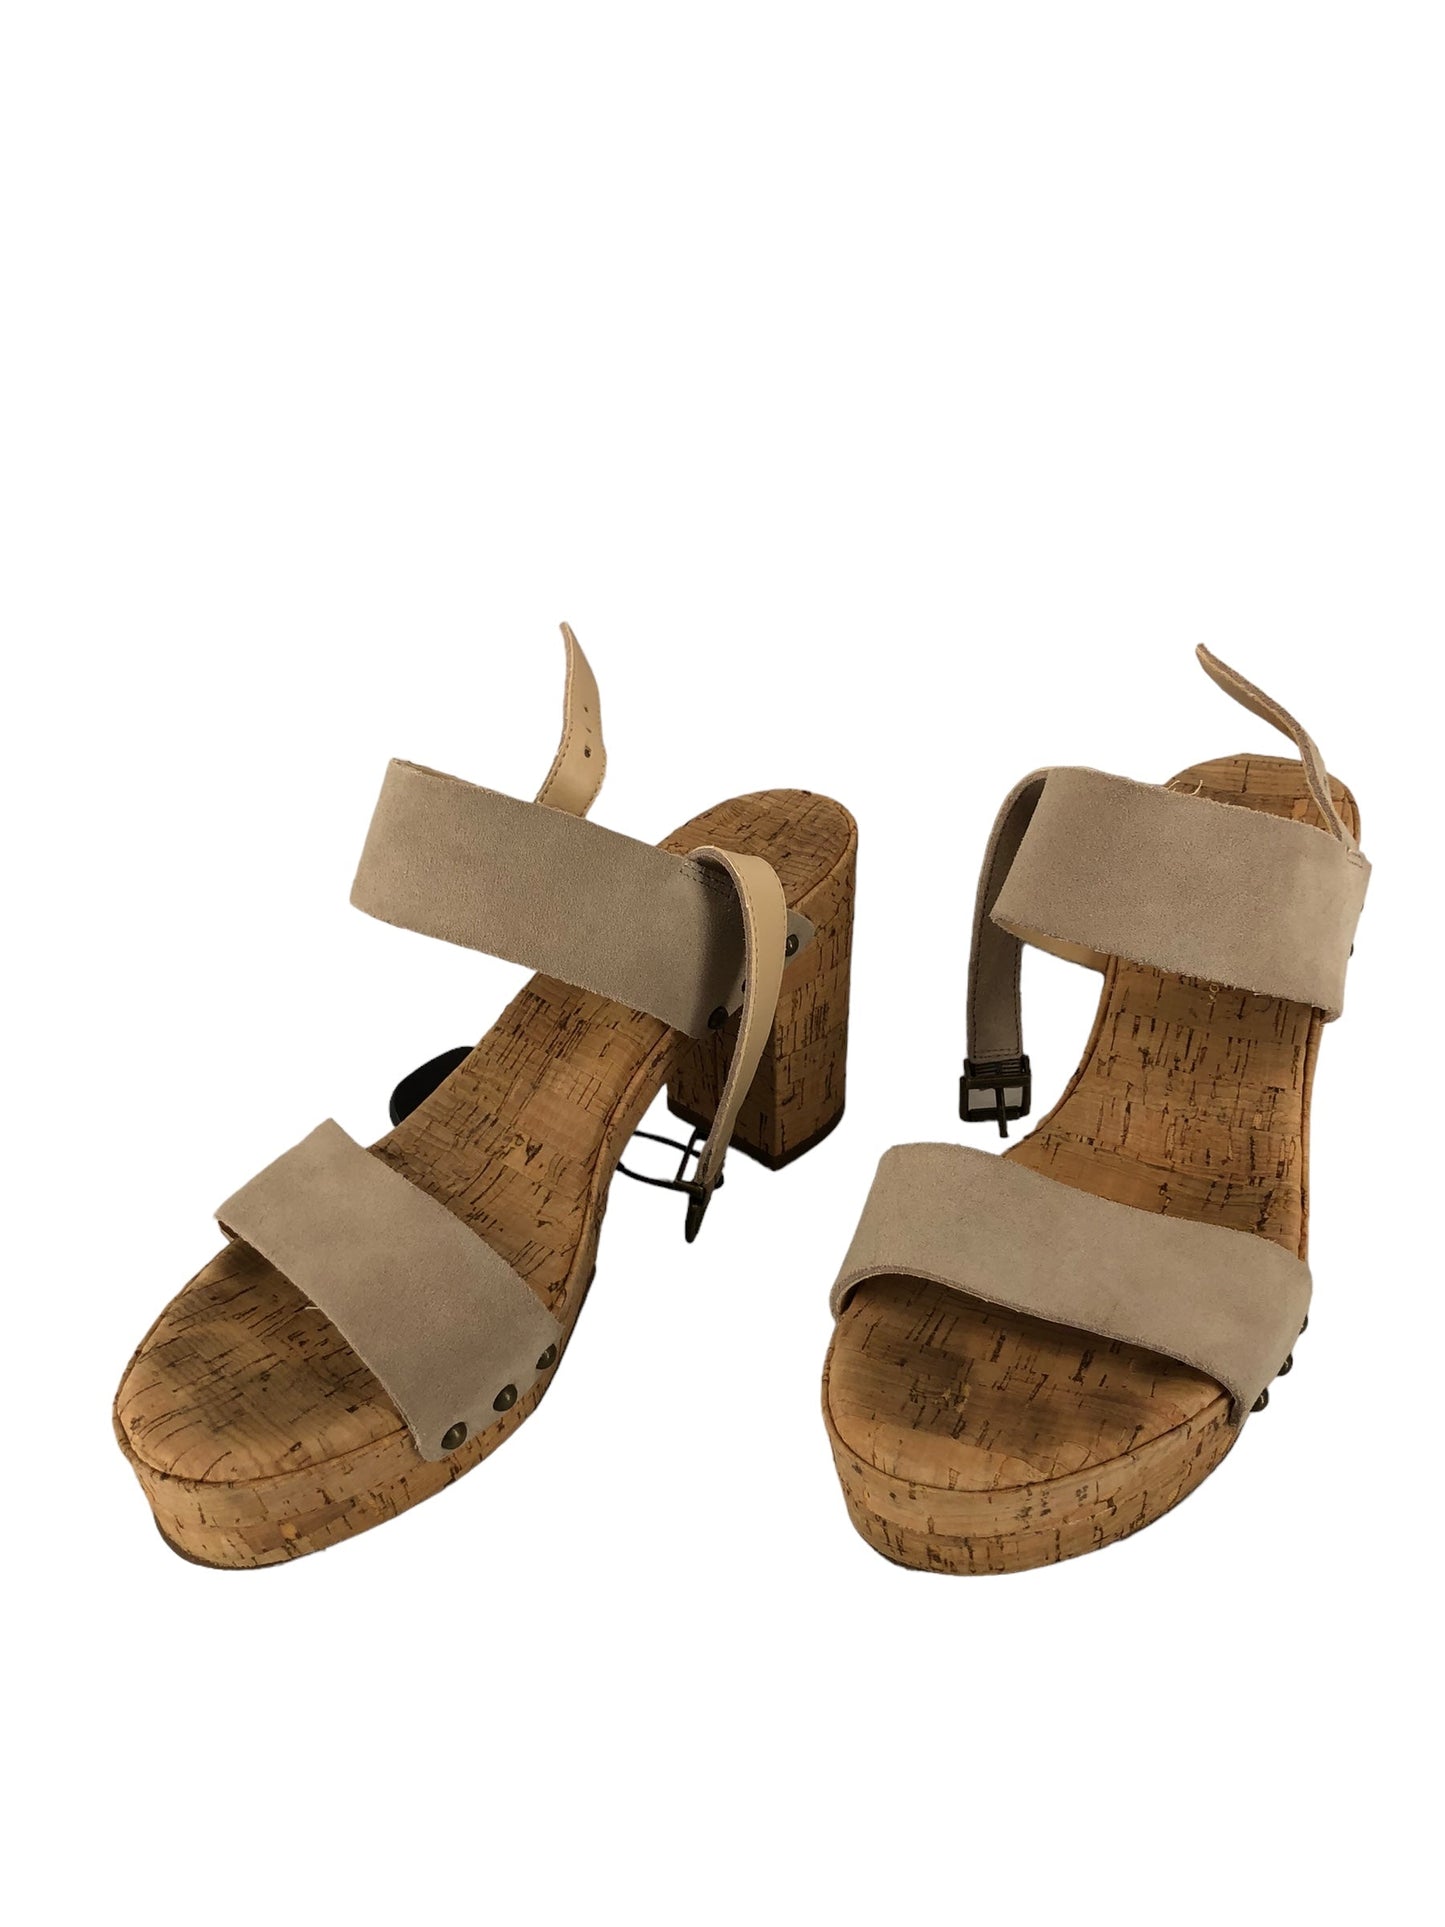 Tan Shoes Heels Platform Jessica Simpson, Size 8